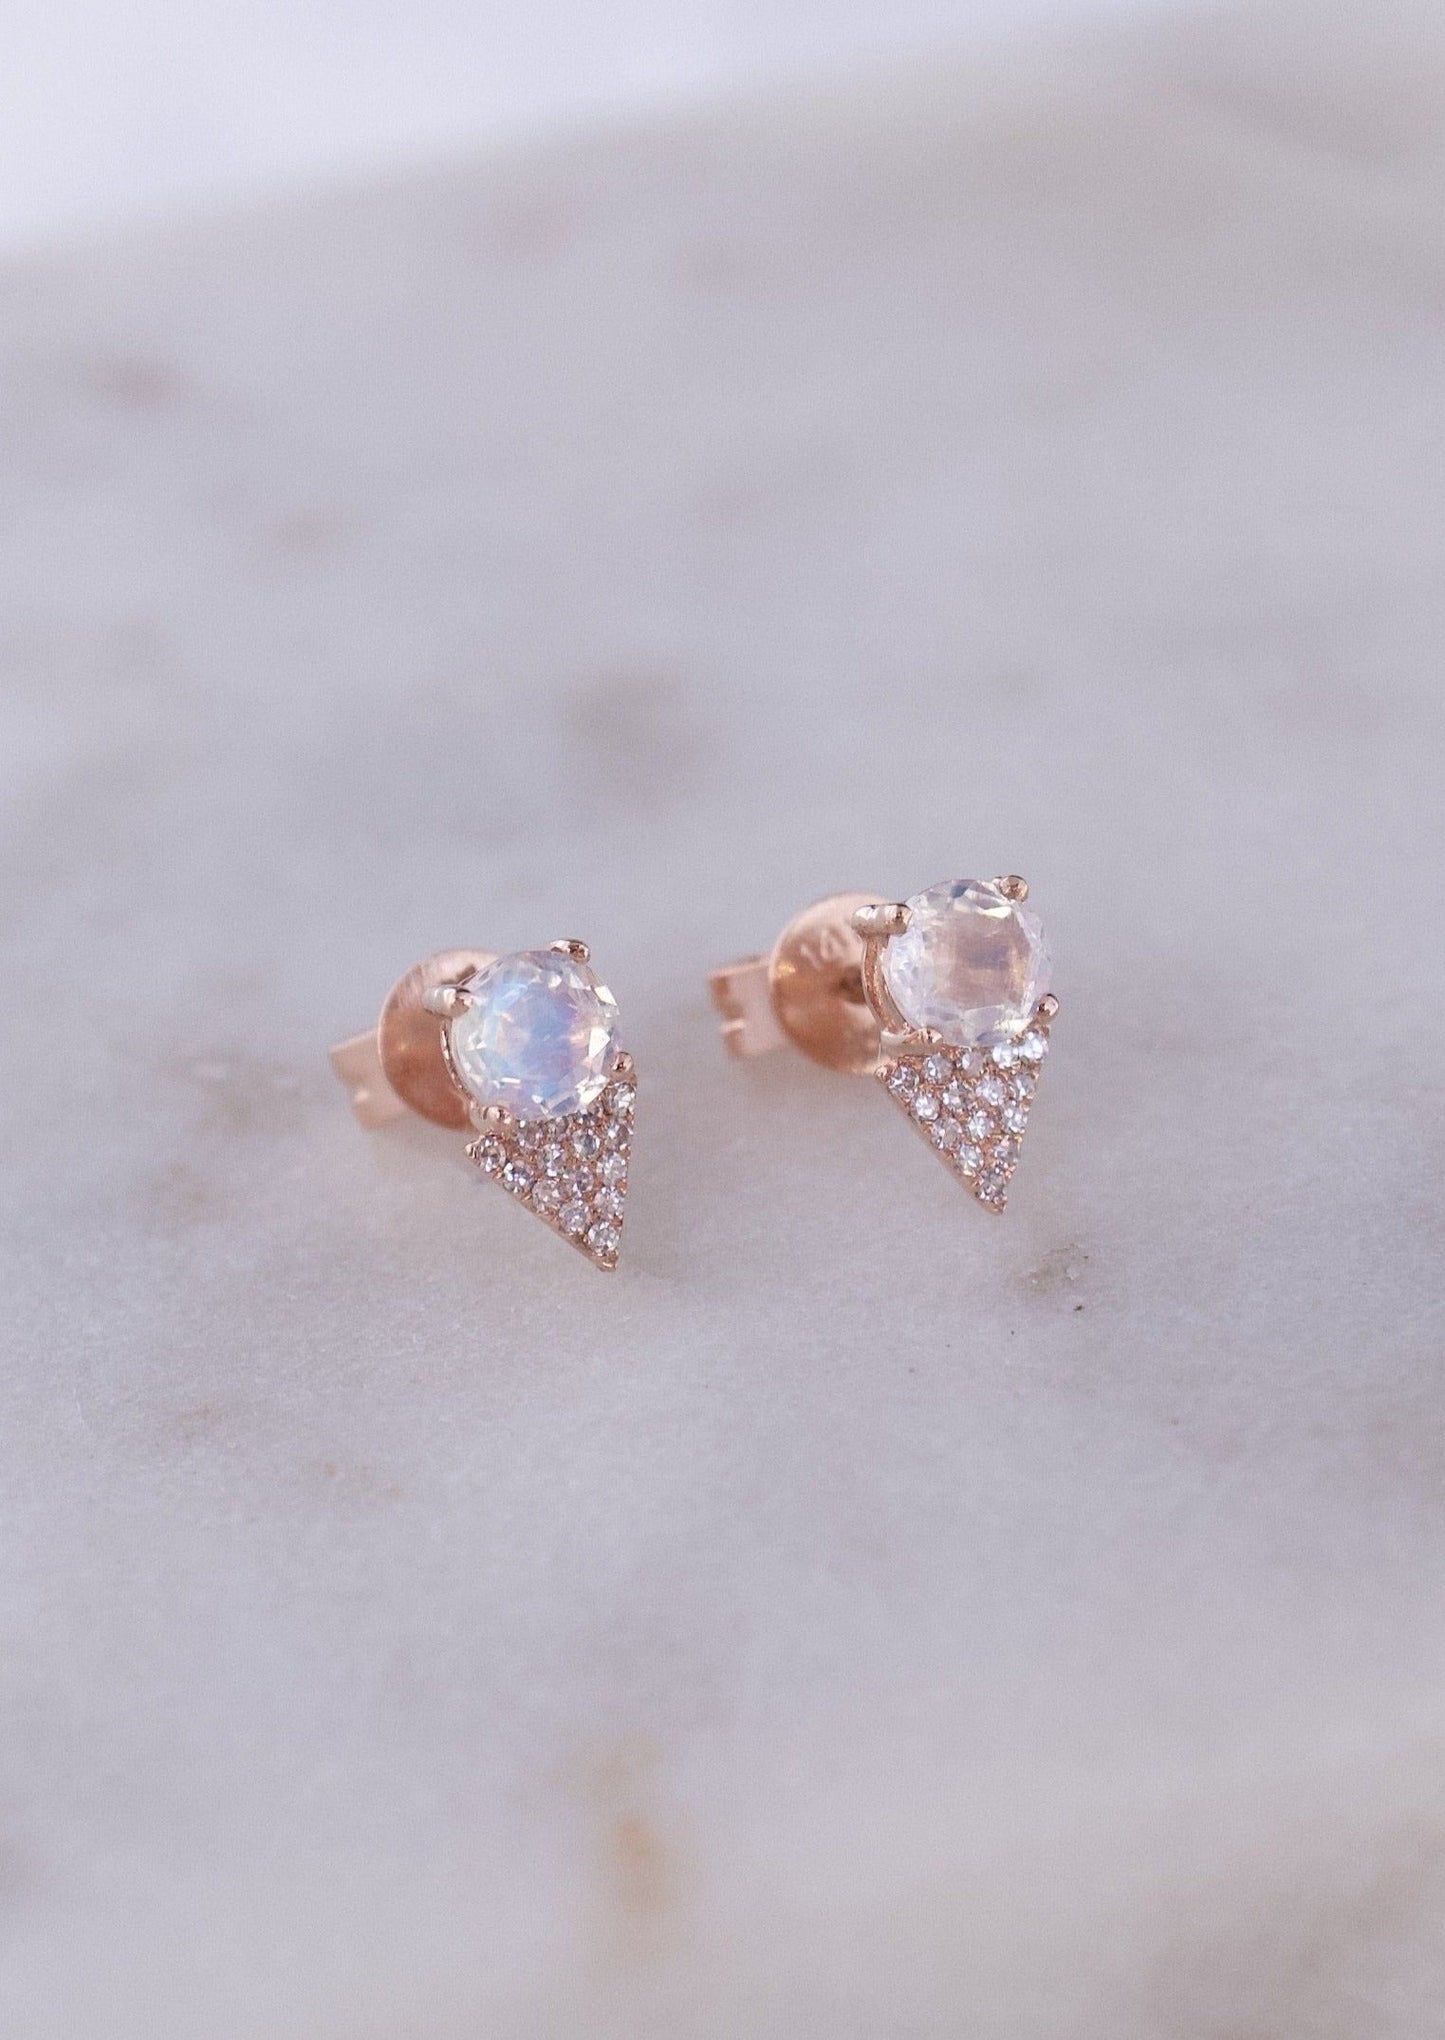 14k Gold Moon Stone Diamond Triangle Earrings